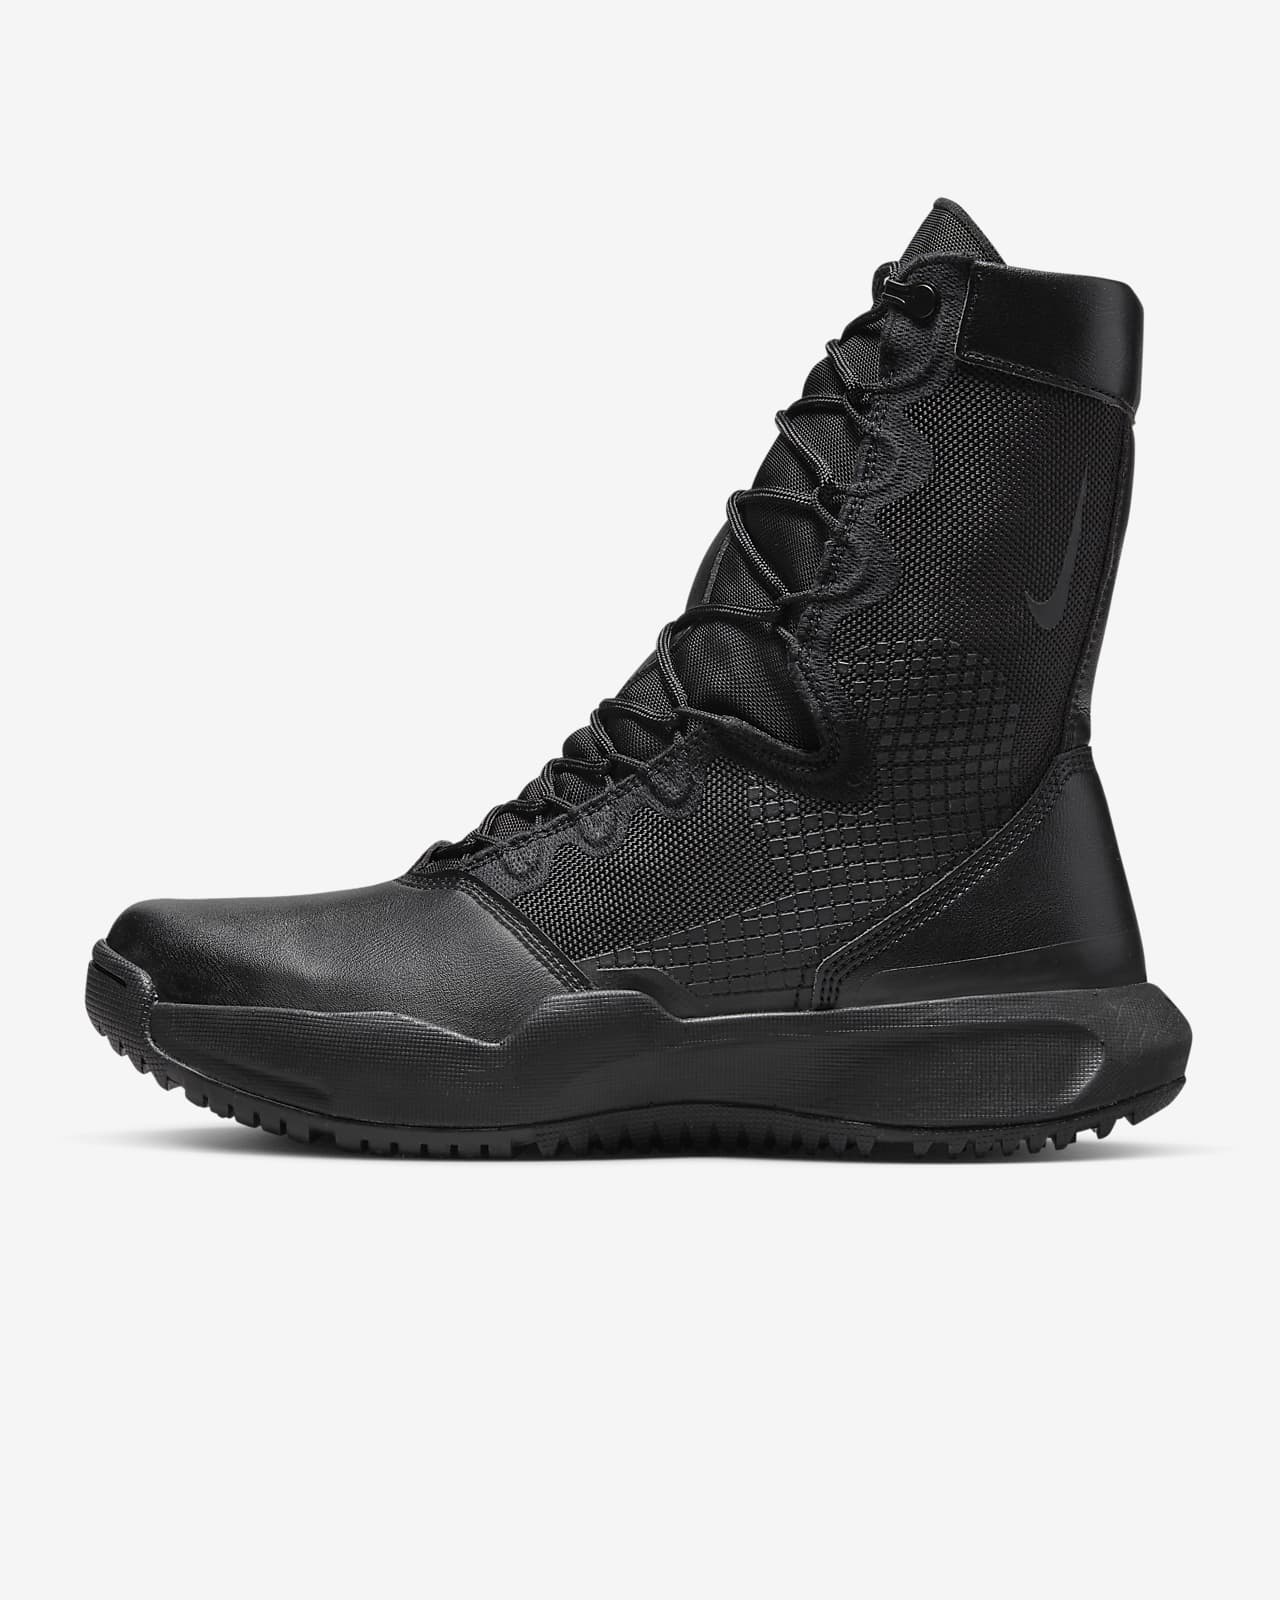 Nike SFB B1 Tactical Boots